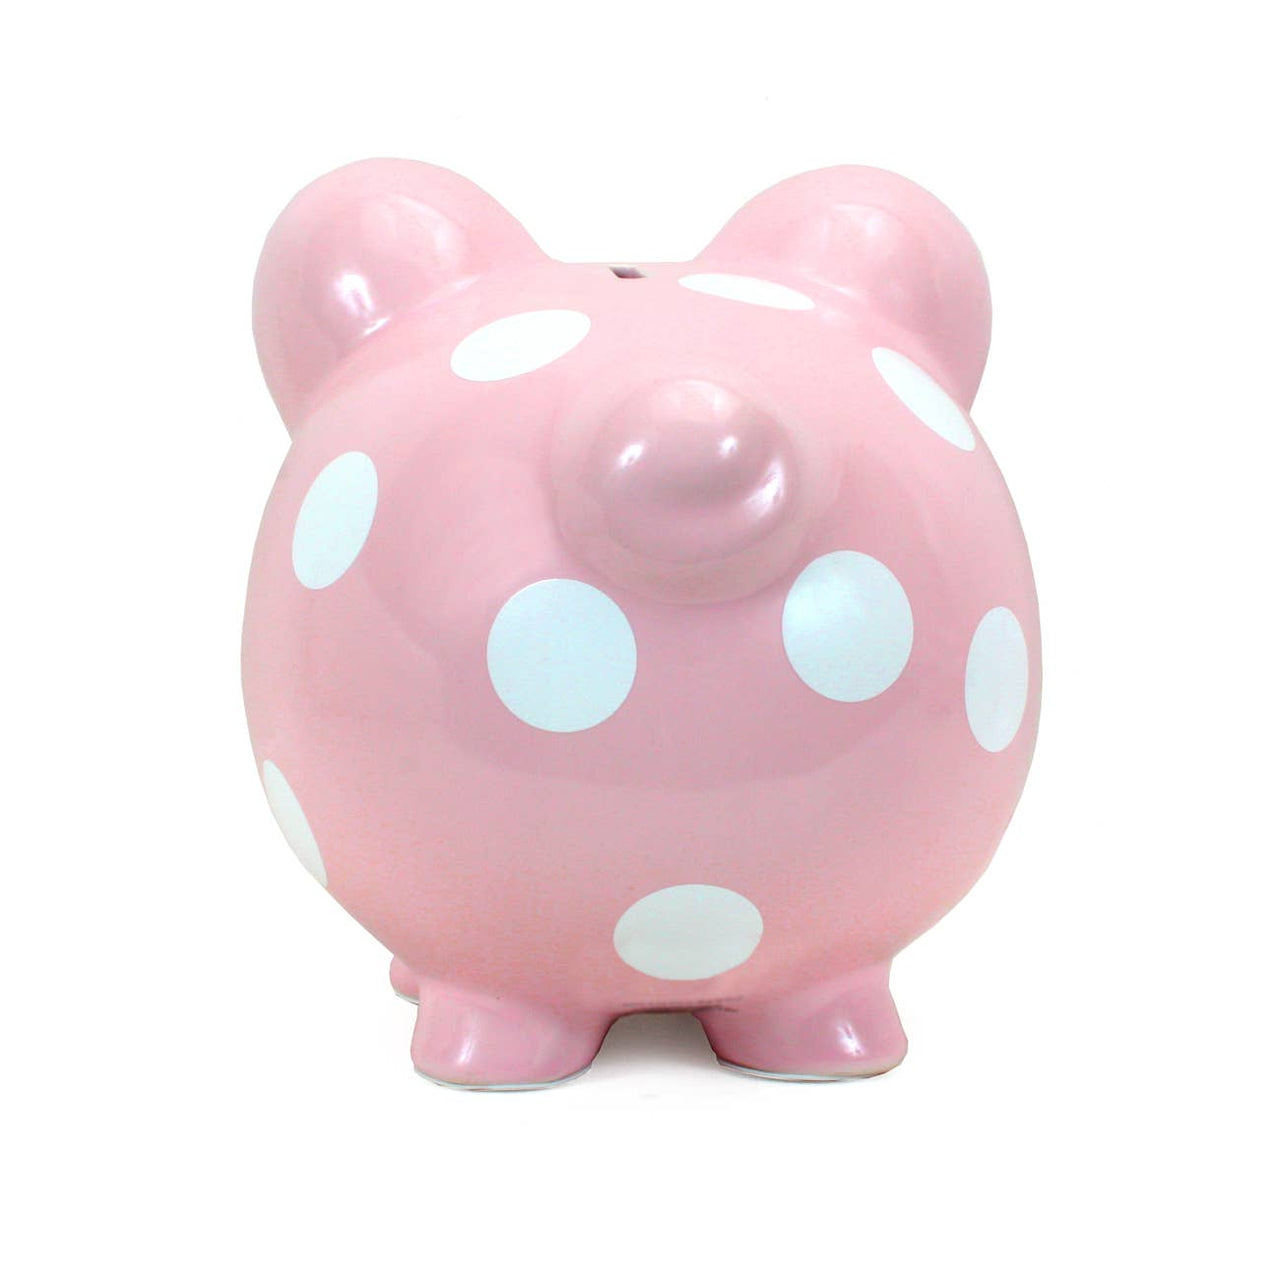 Child to Cherish Pink w/ White Dot Piggy Bank